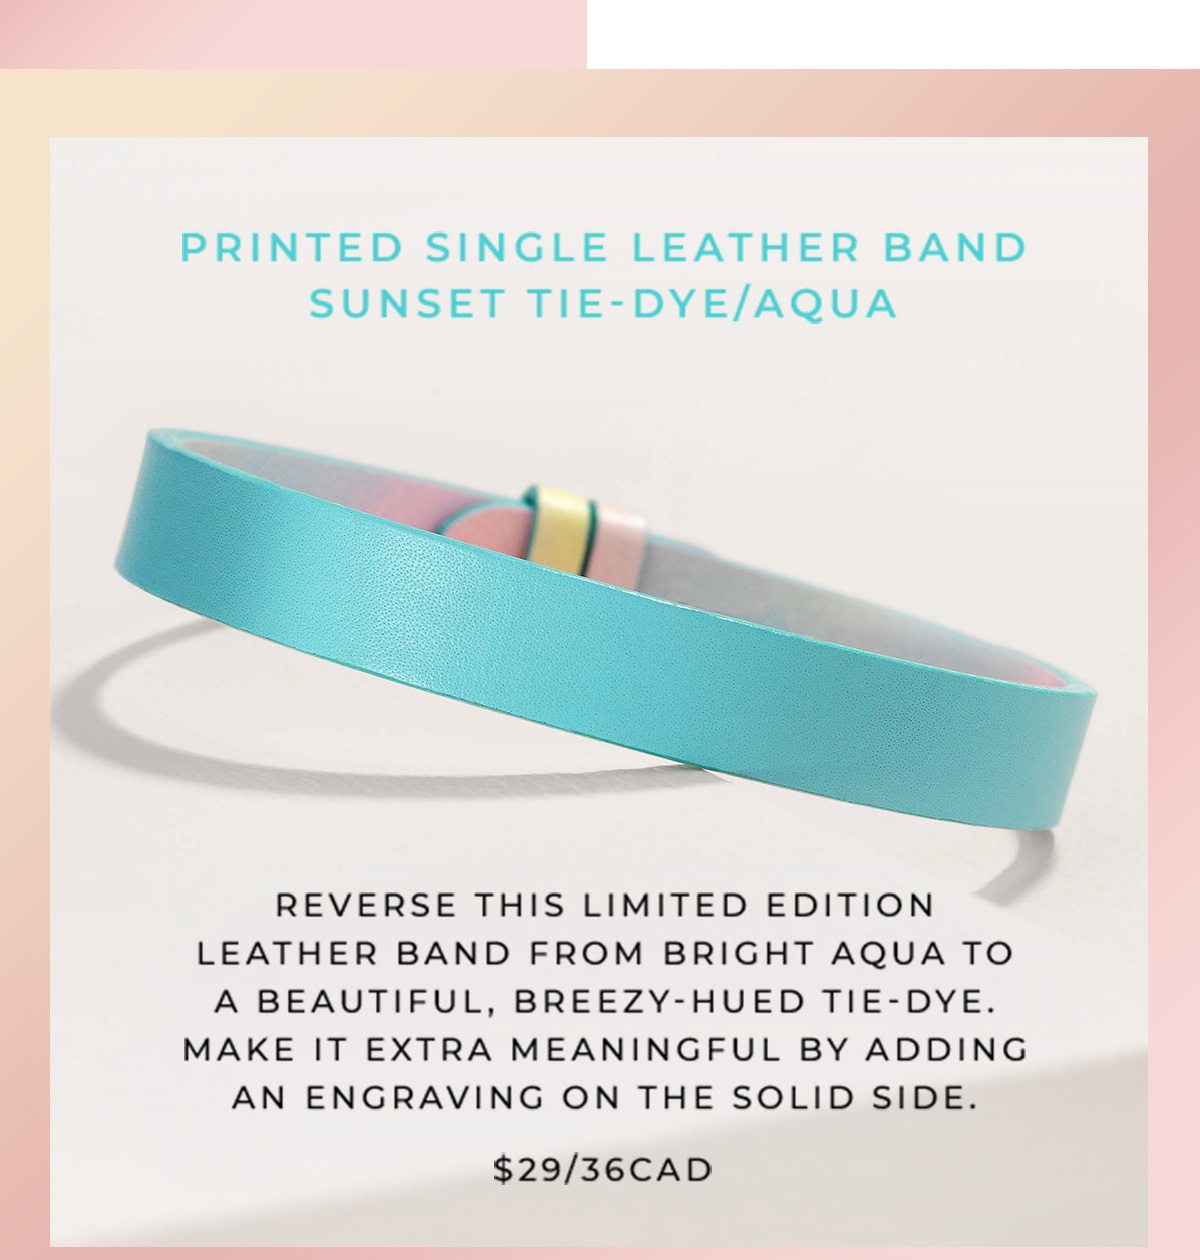 Printed Single Leather Band